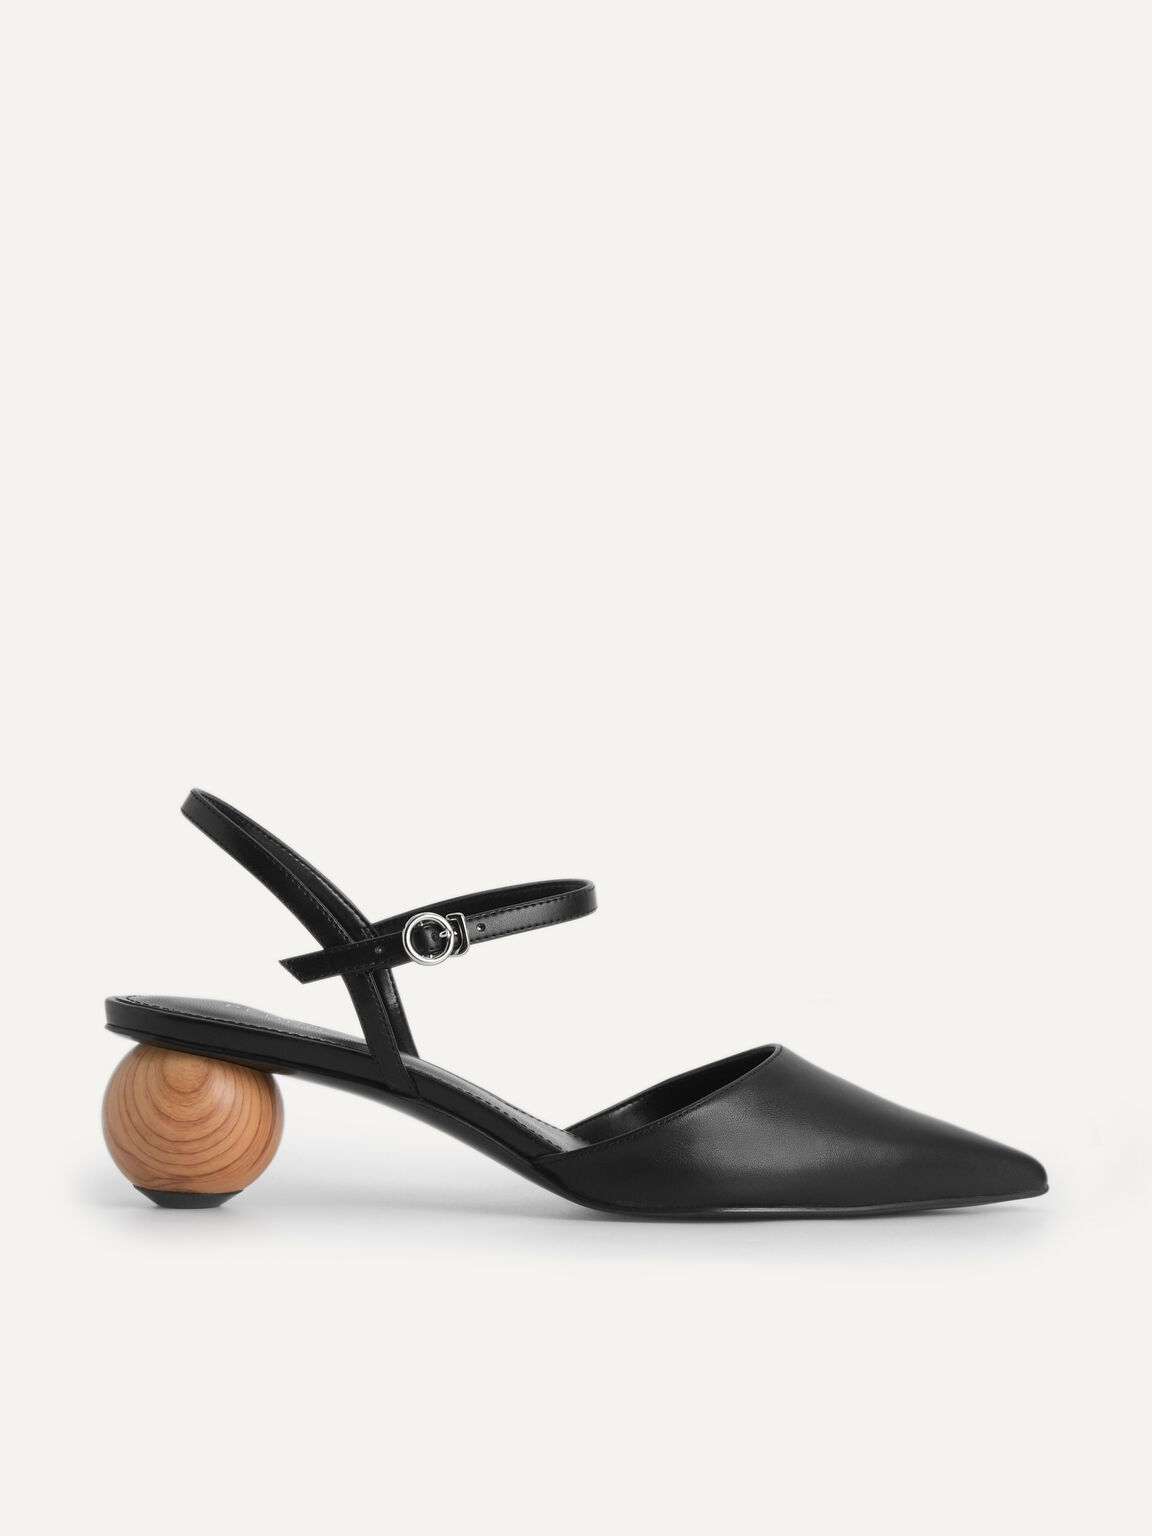 Leather Pointed Toe Heels, Black